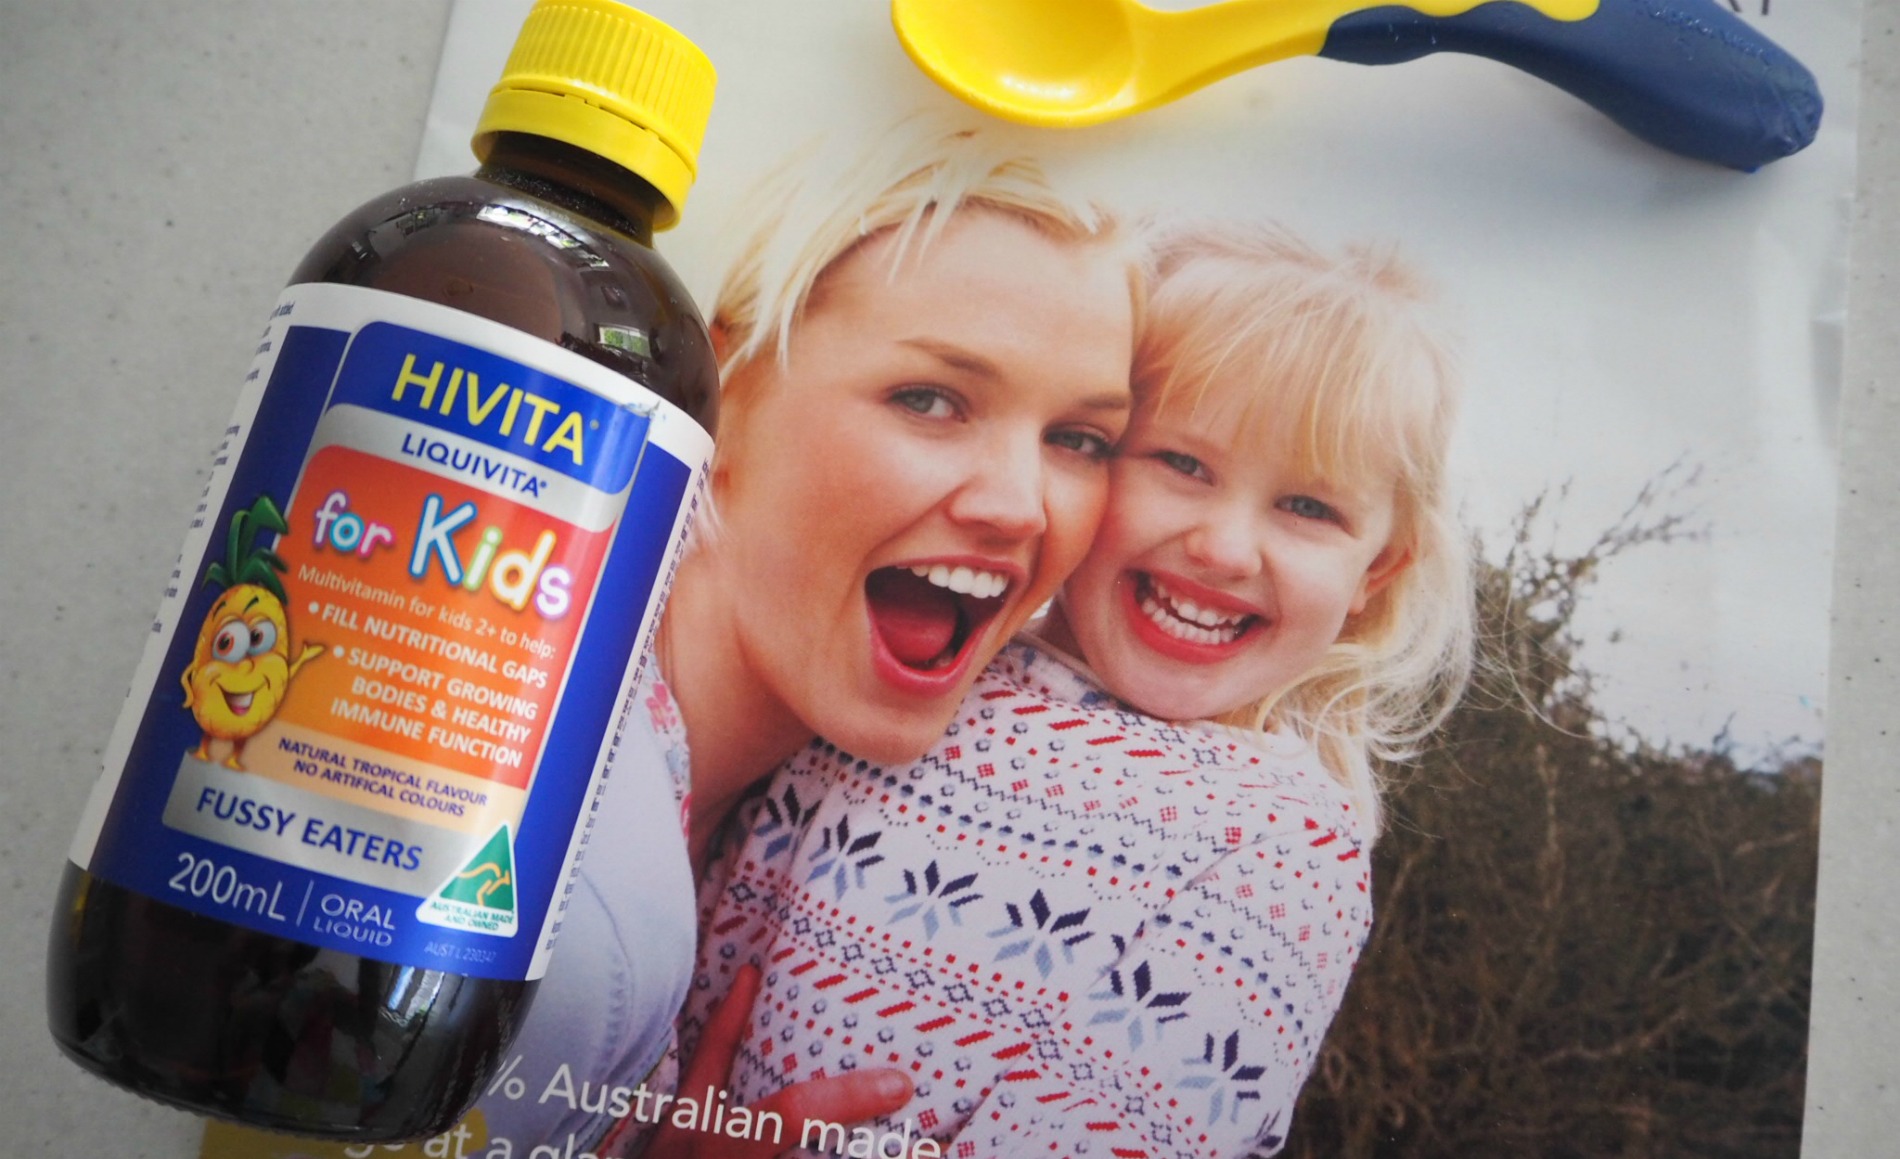 hivita liquivita for kids review by The Plumbette